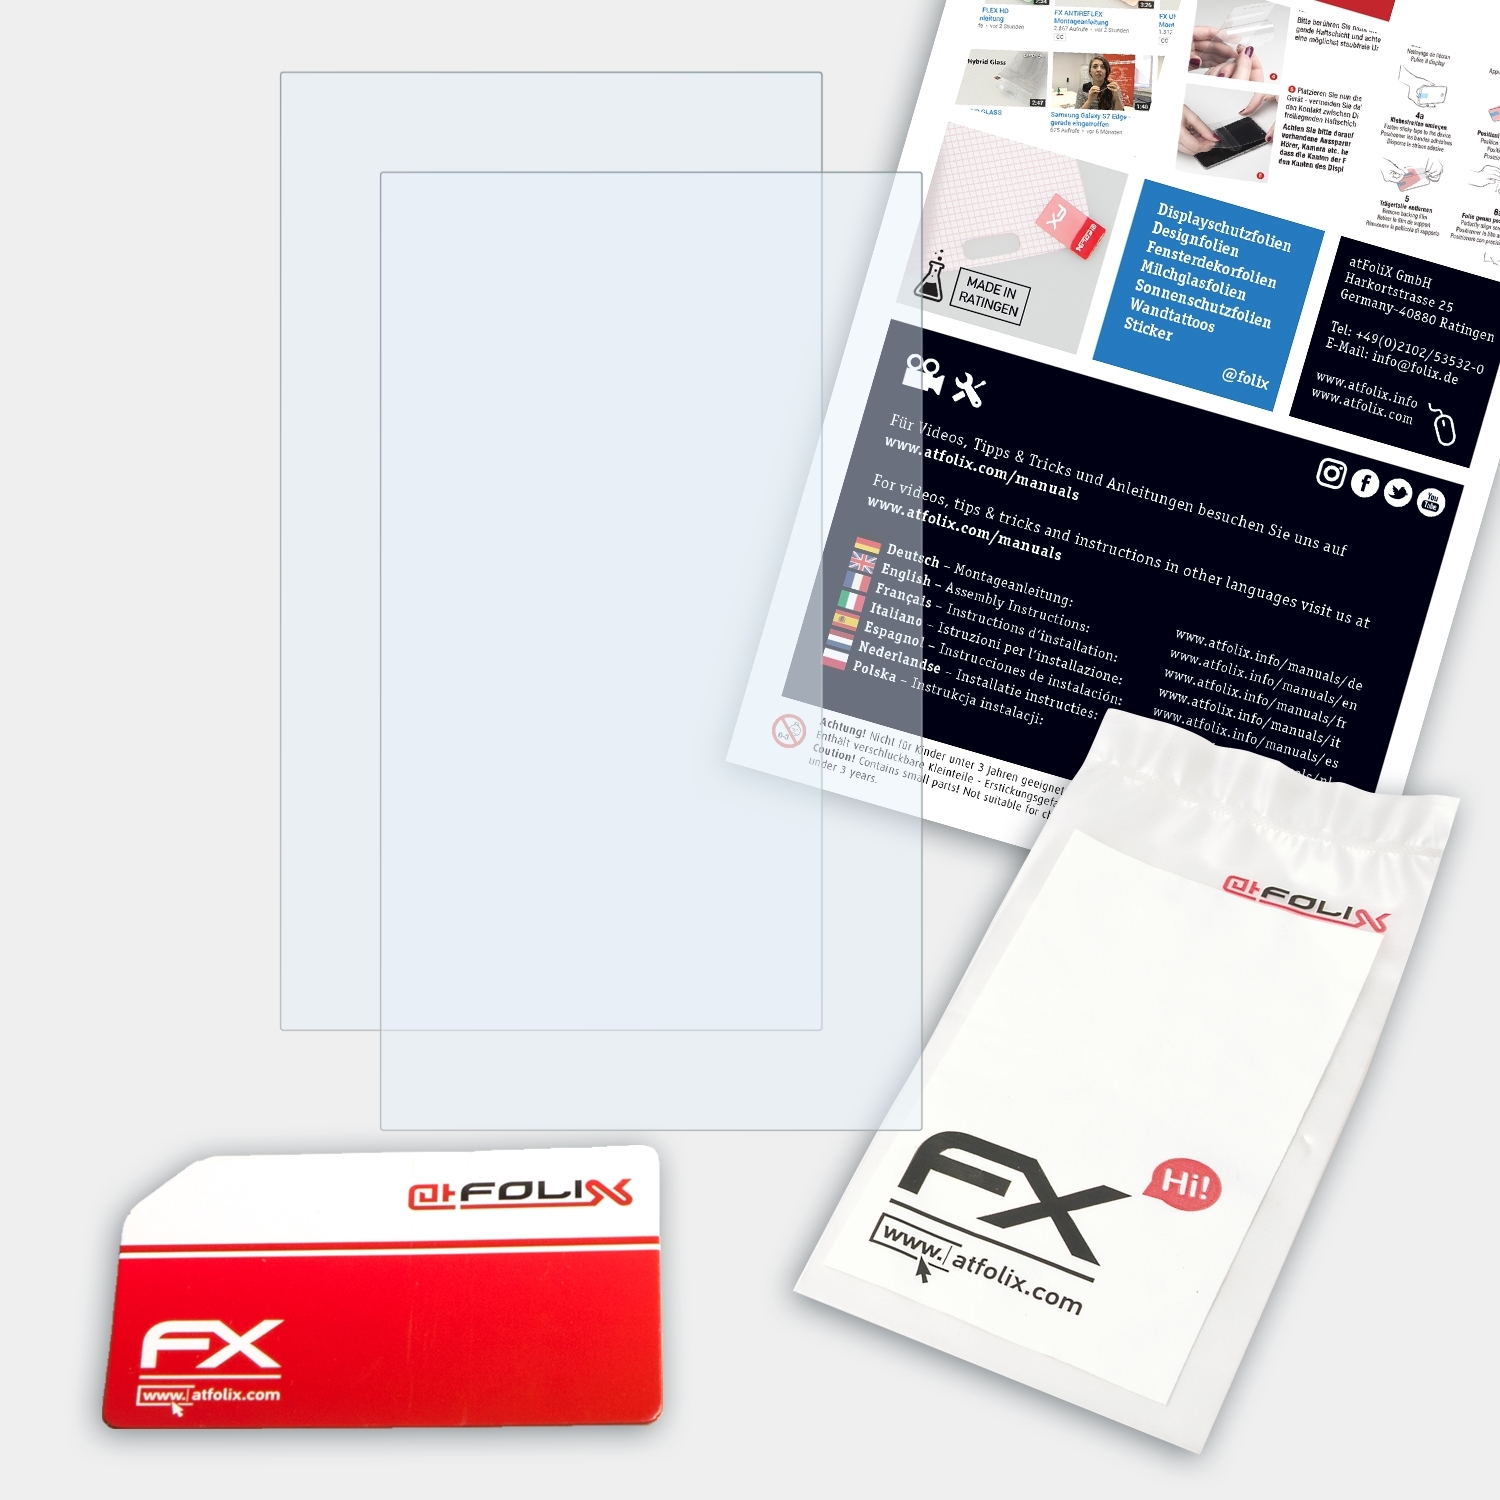 Gaming IdeaPad 3i) 2x Lenovo FX-Clear Displayschutz(für ATFOLIX